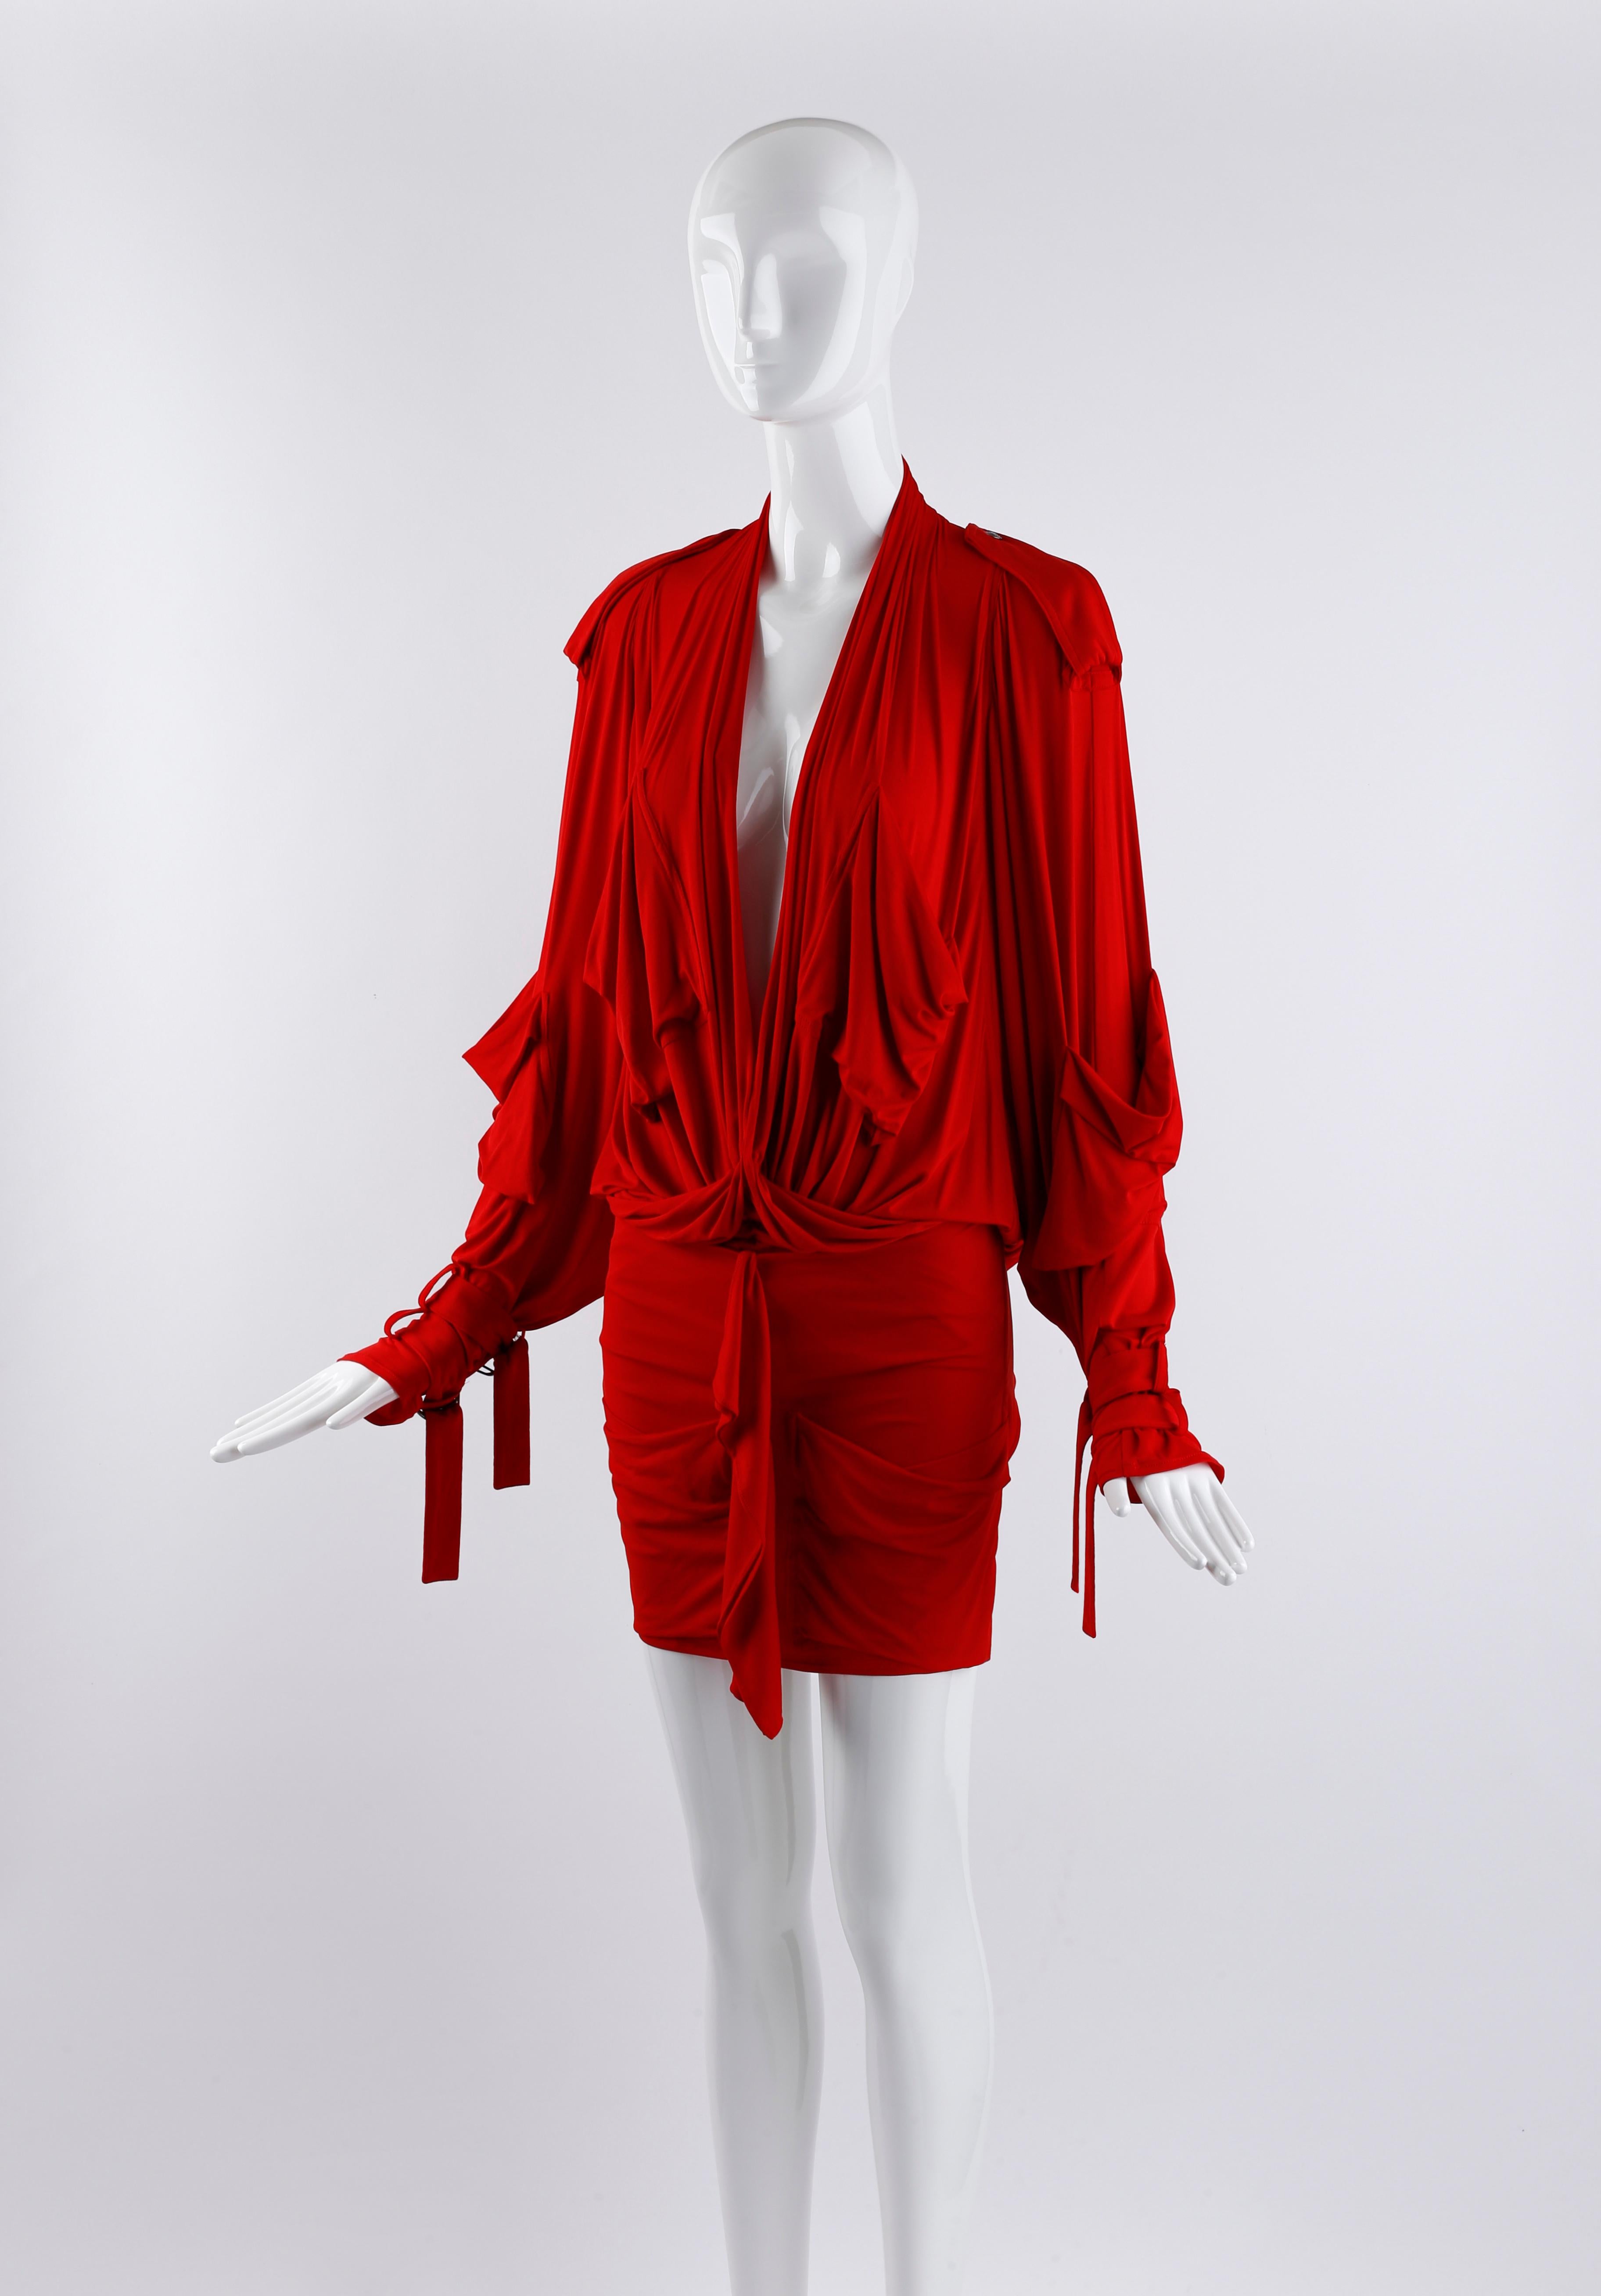 Christian Dior John Galliano S/S 2003 Red Plunge Draped Pocket Mini Dress For Sale 6